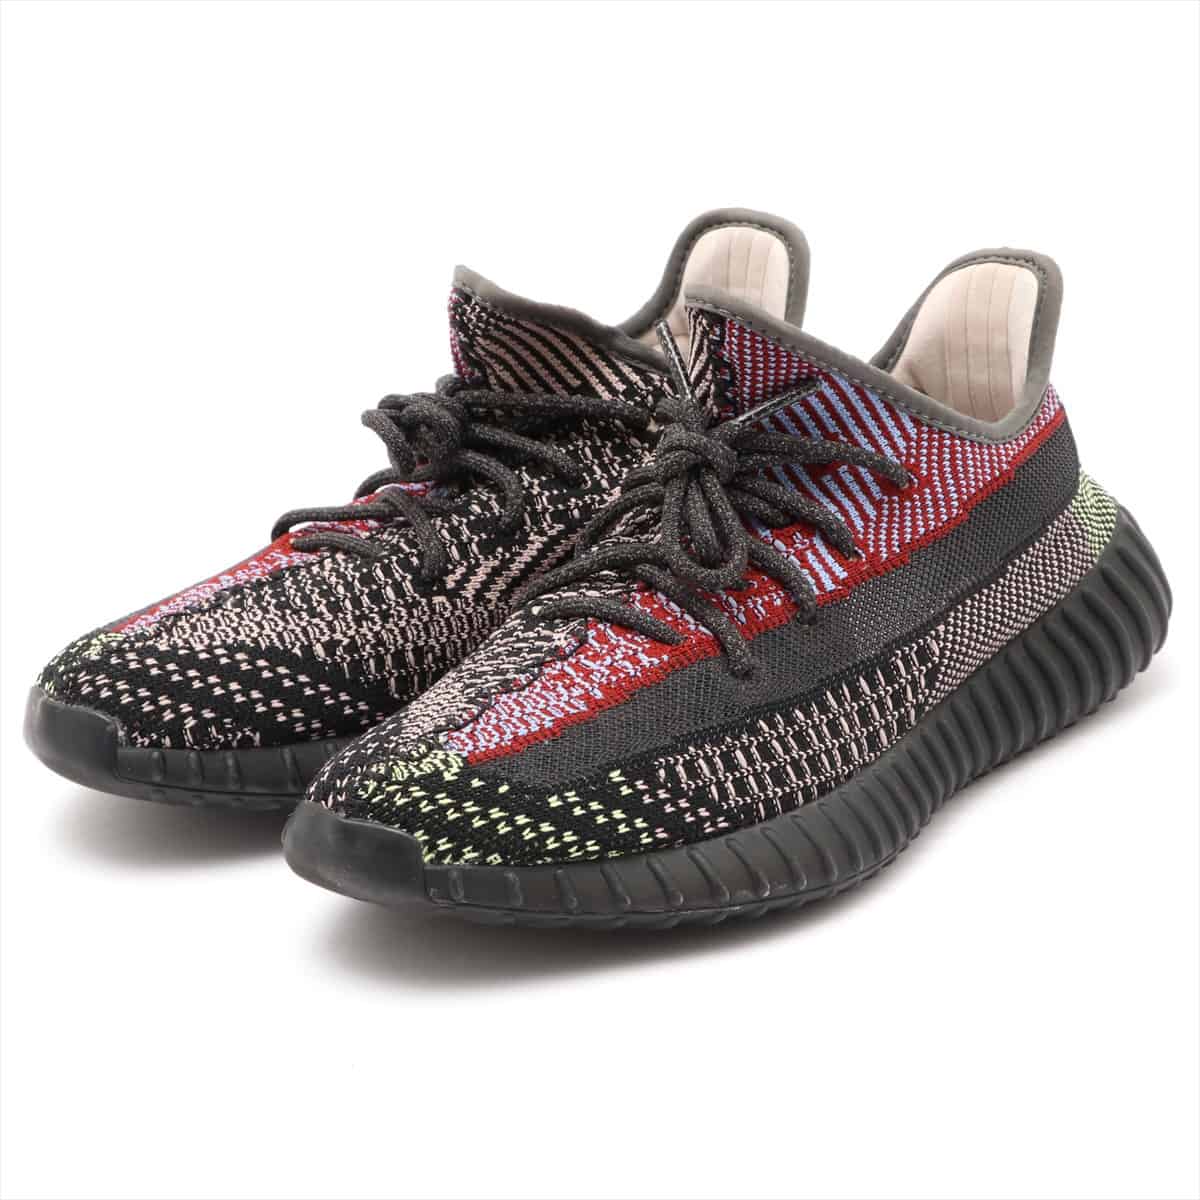 Adidas Knit Sneakers 27.0cm Men's Multicolor easy boost 350 V2